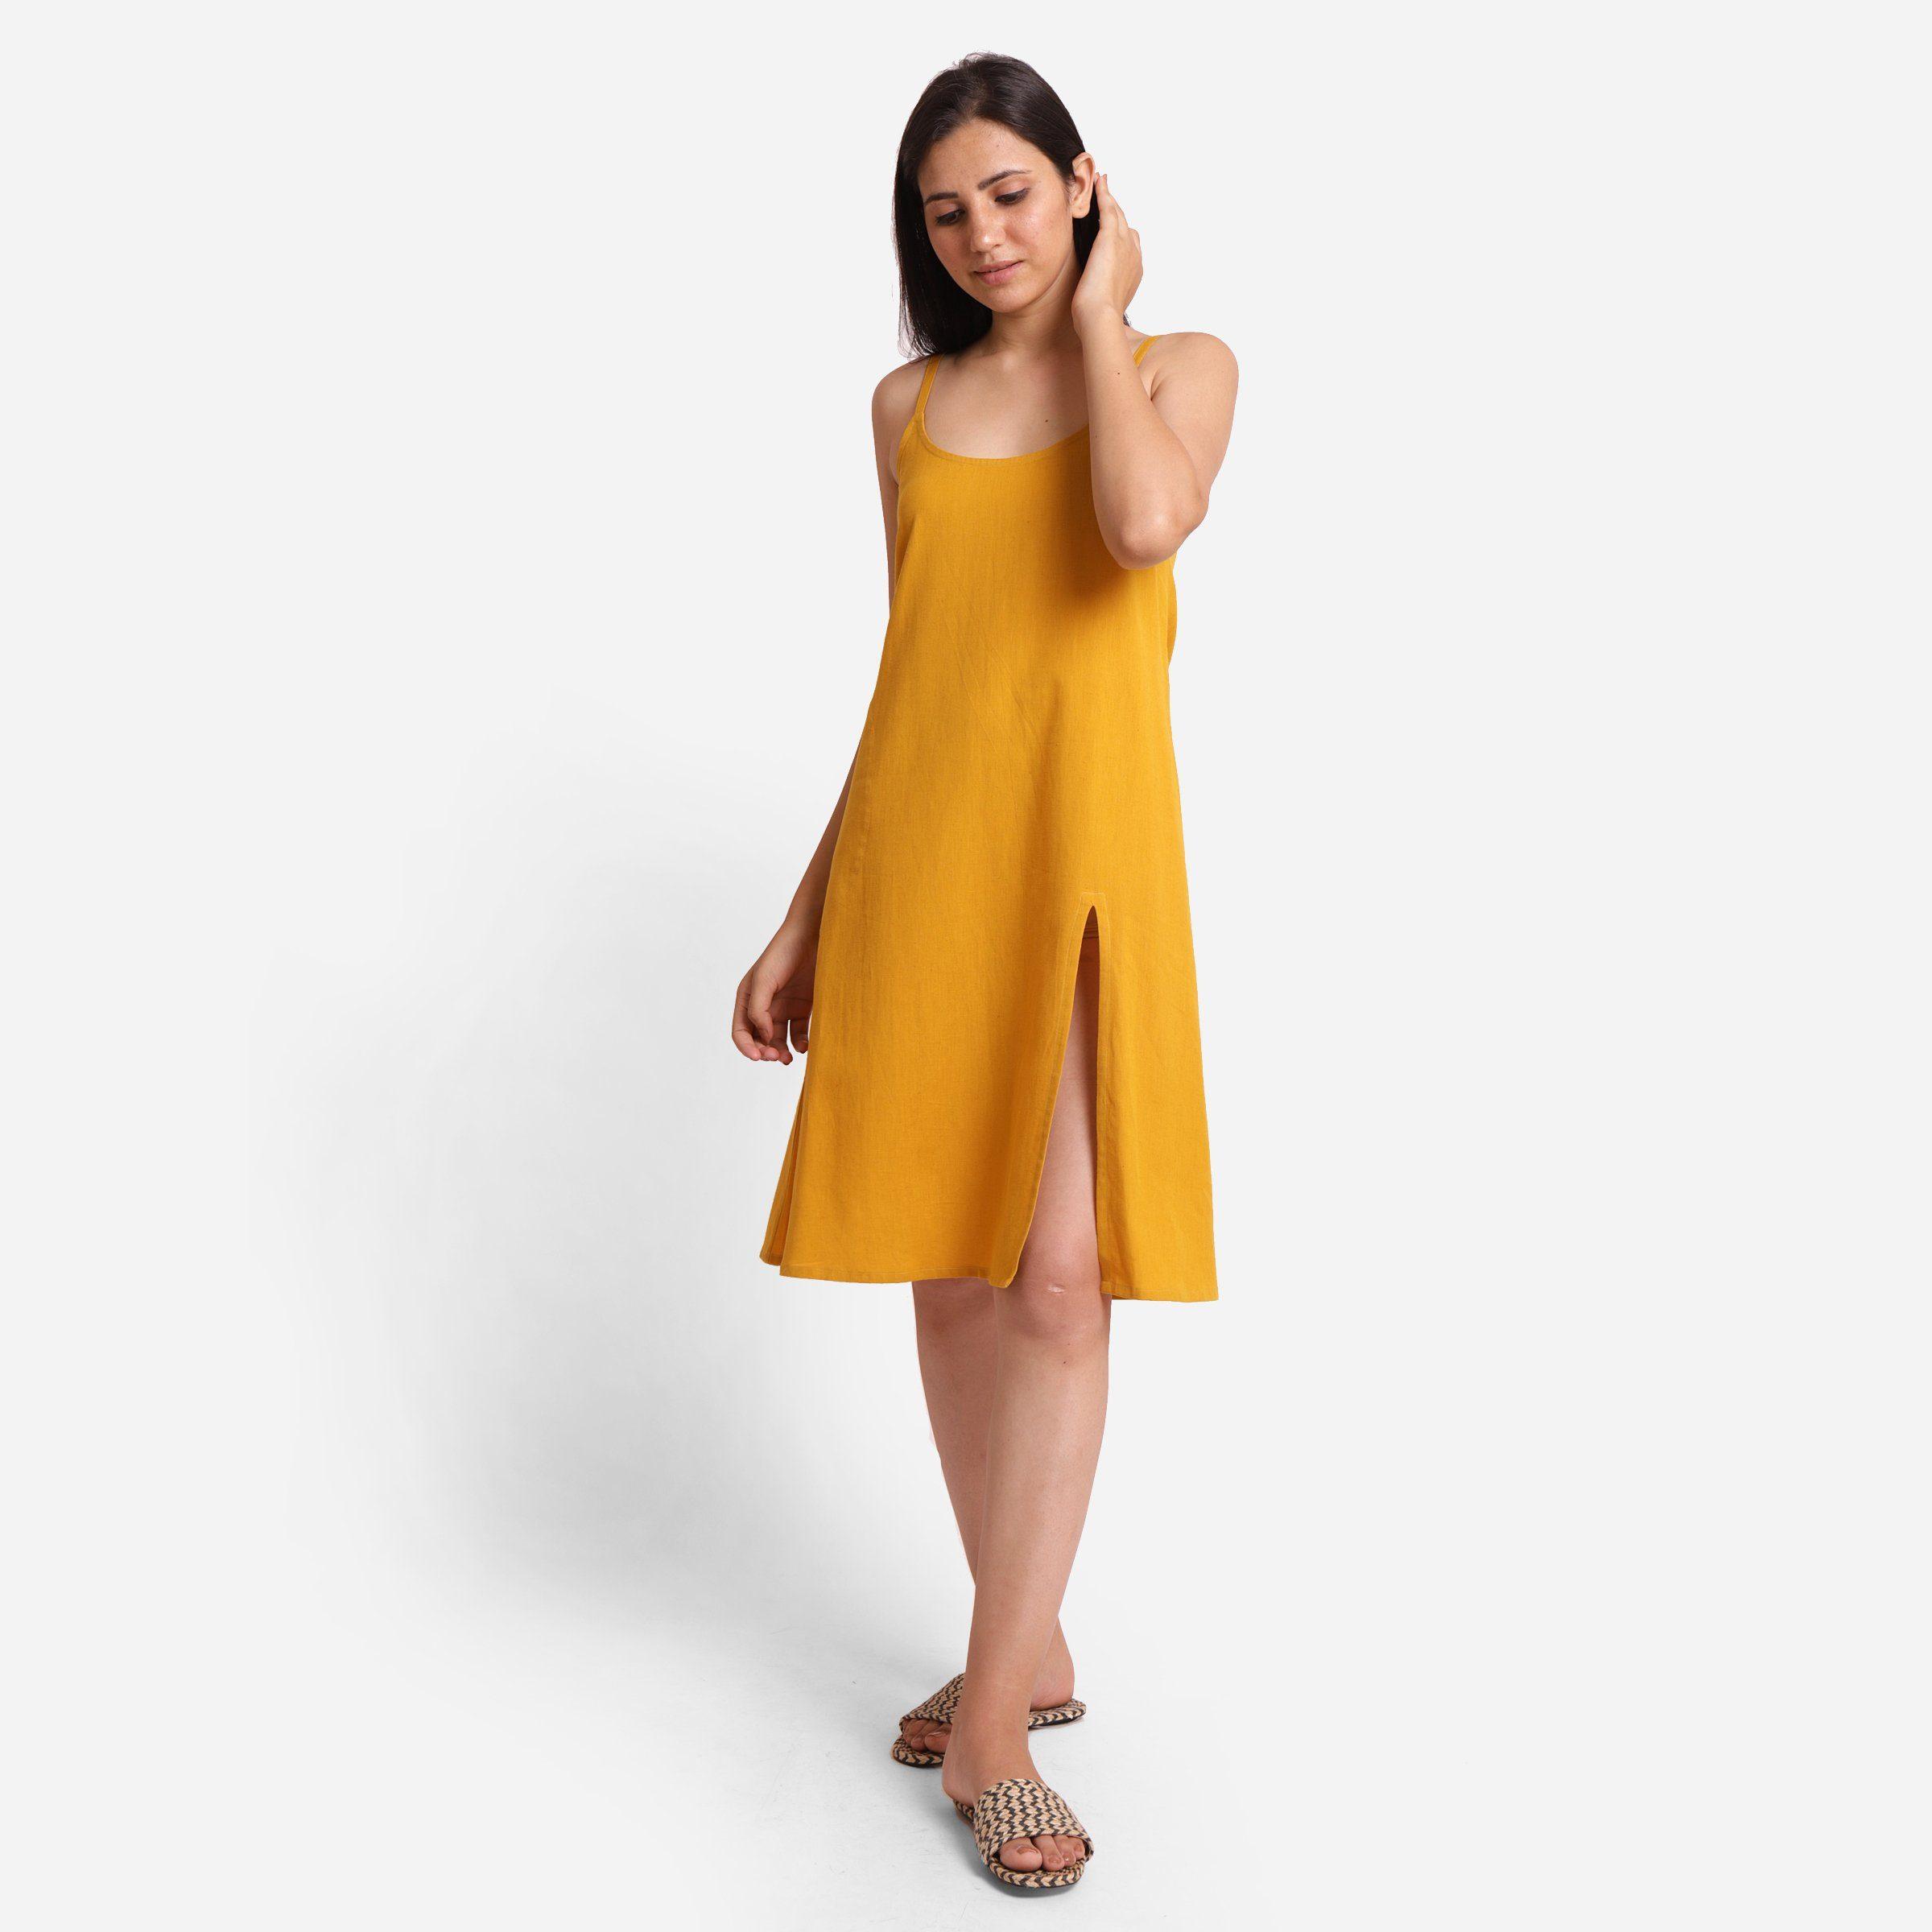 Harpa Women's Cotton A-Line Standard Length Dress (GR6261_Mauve_XL),Size XL